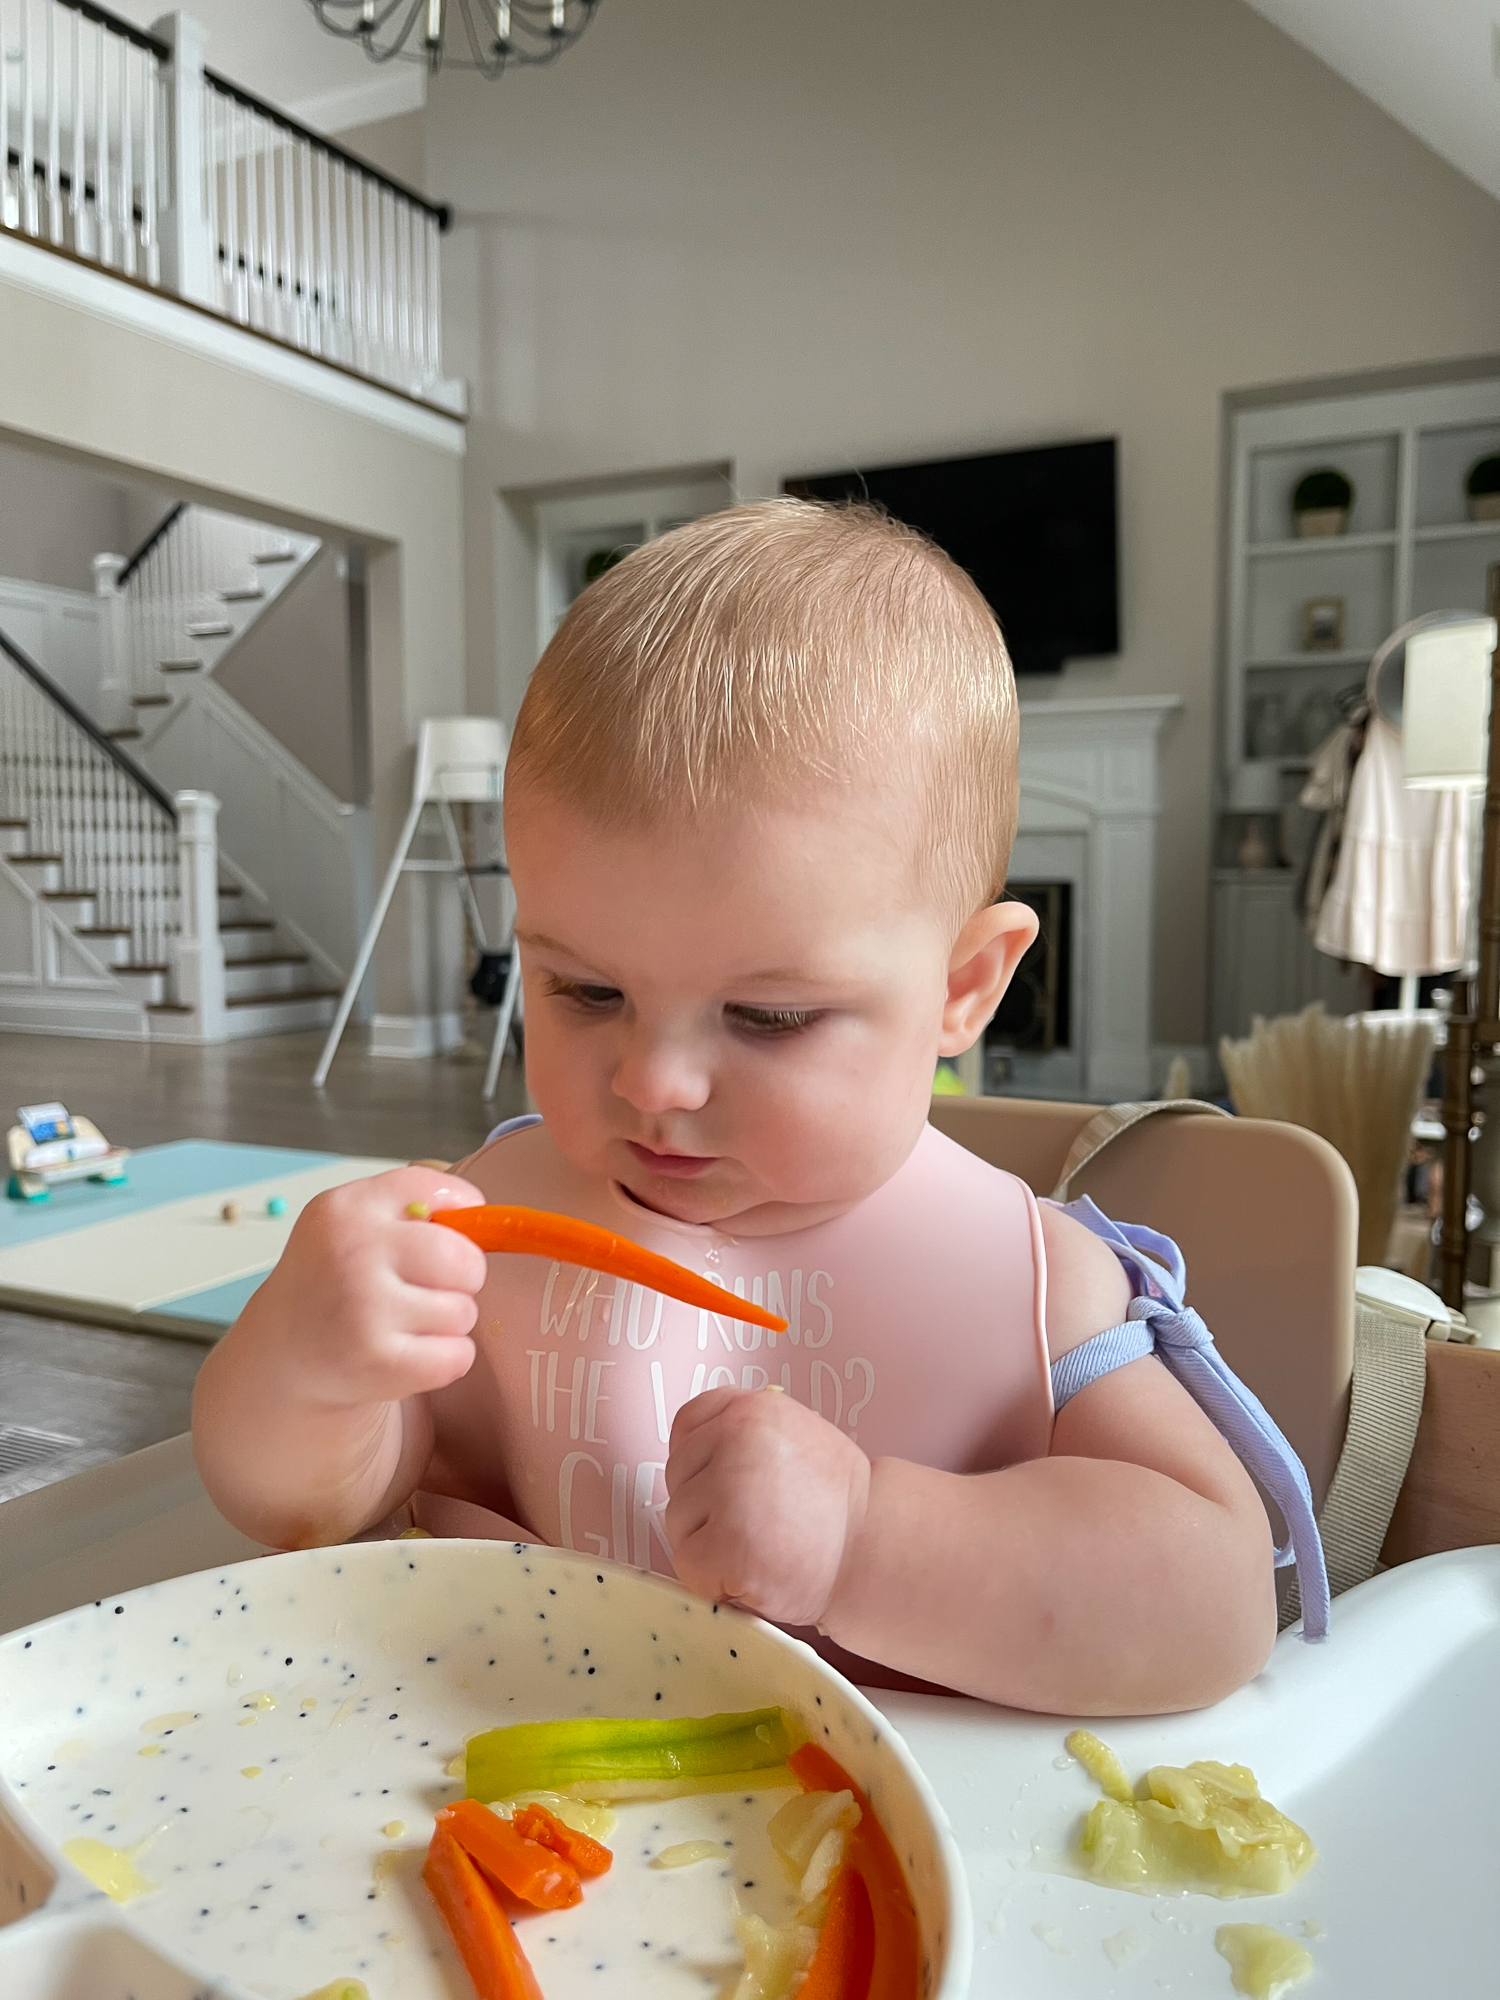 21 Pcs Silicone Baby Feeding Set Toddler Led Weaning Supplies